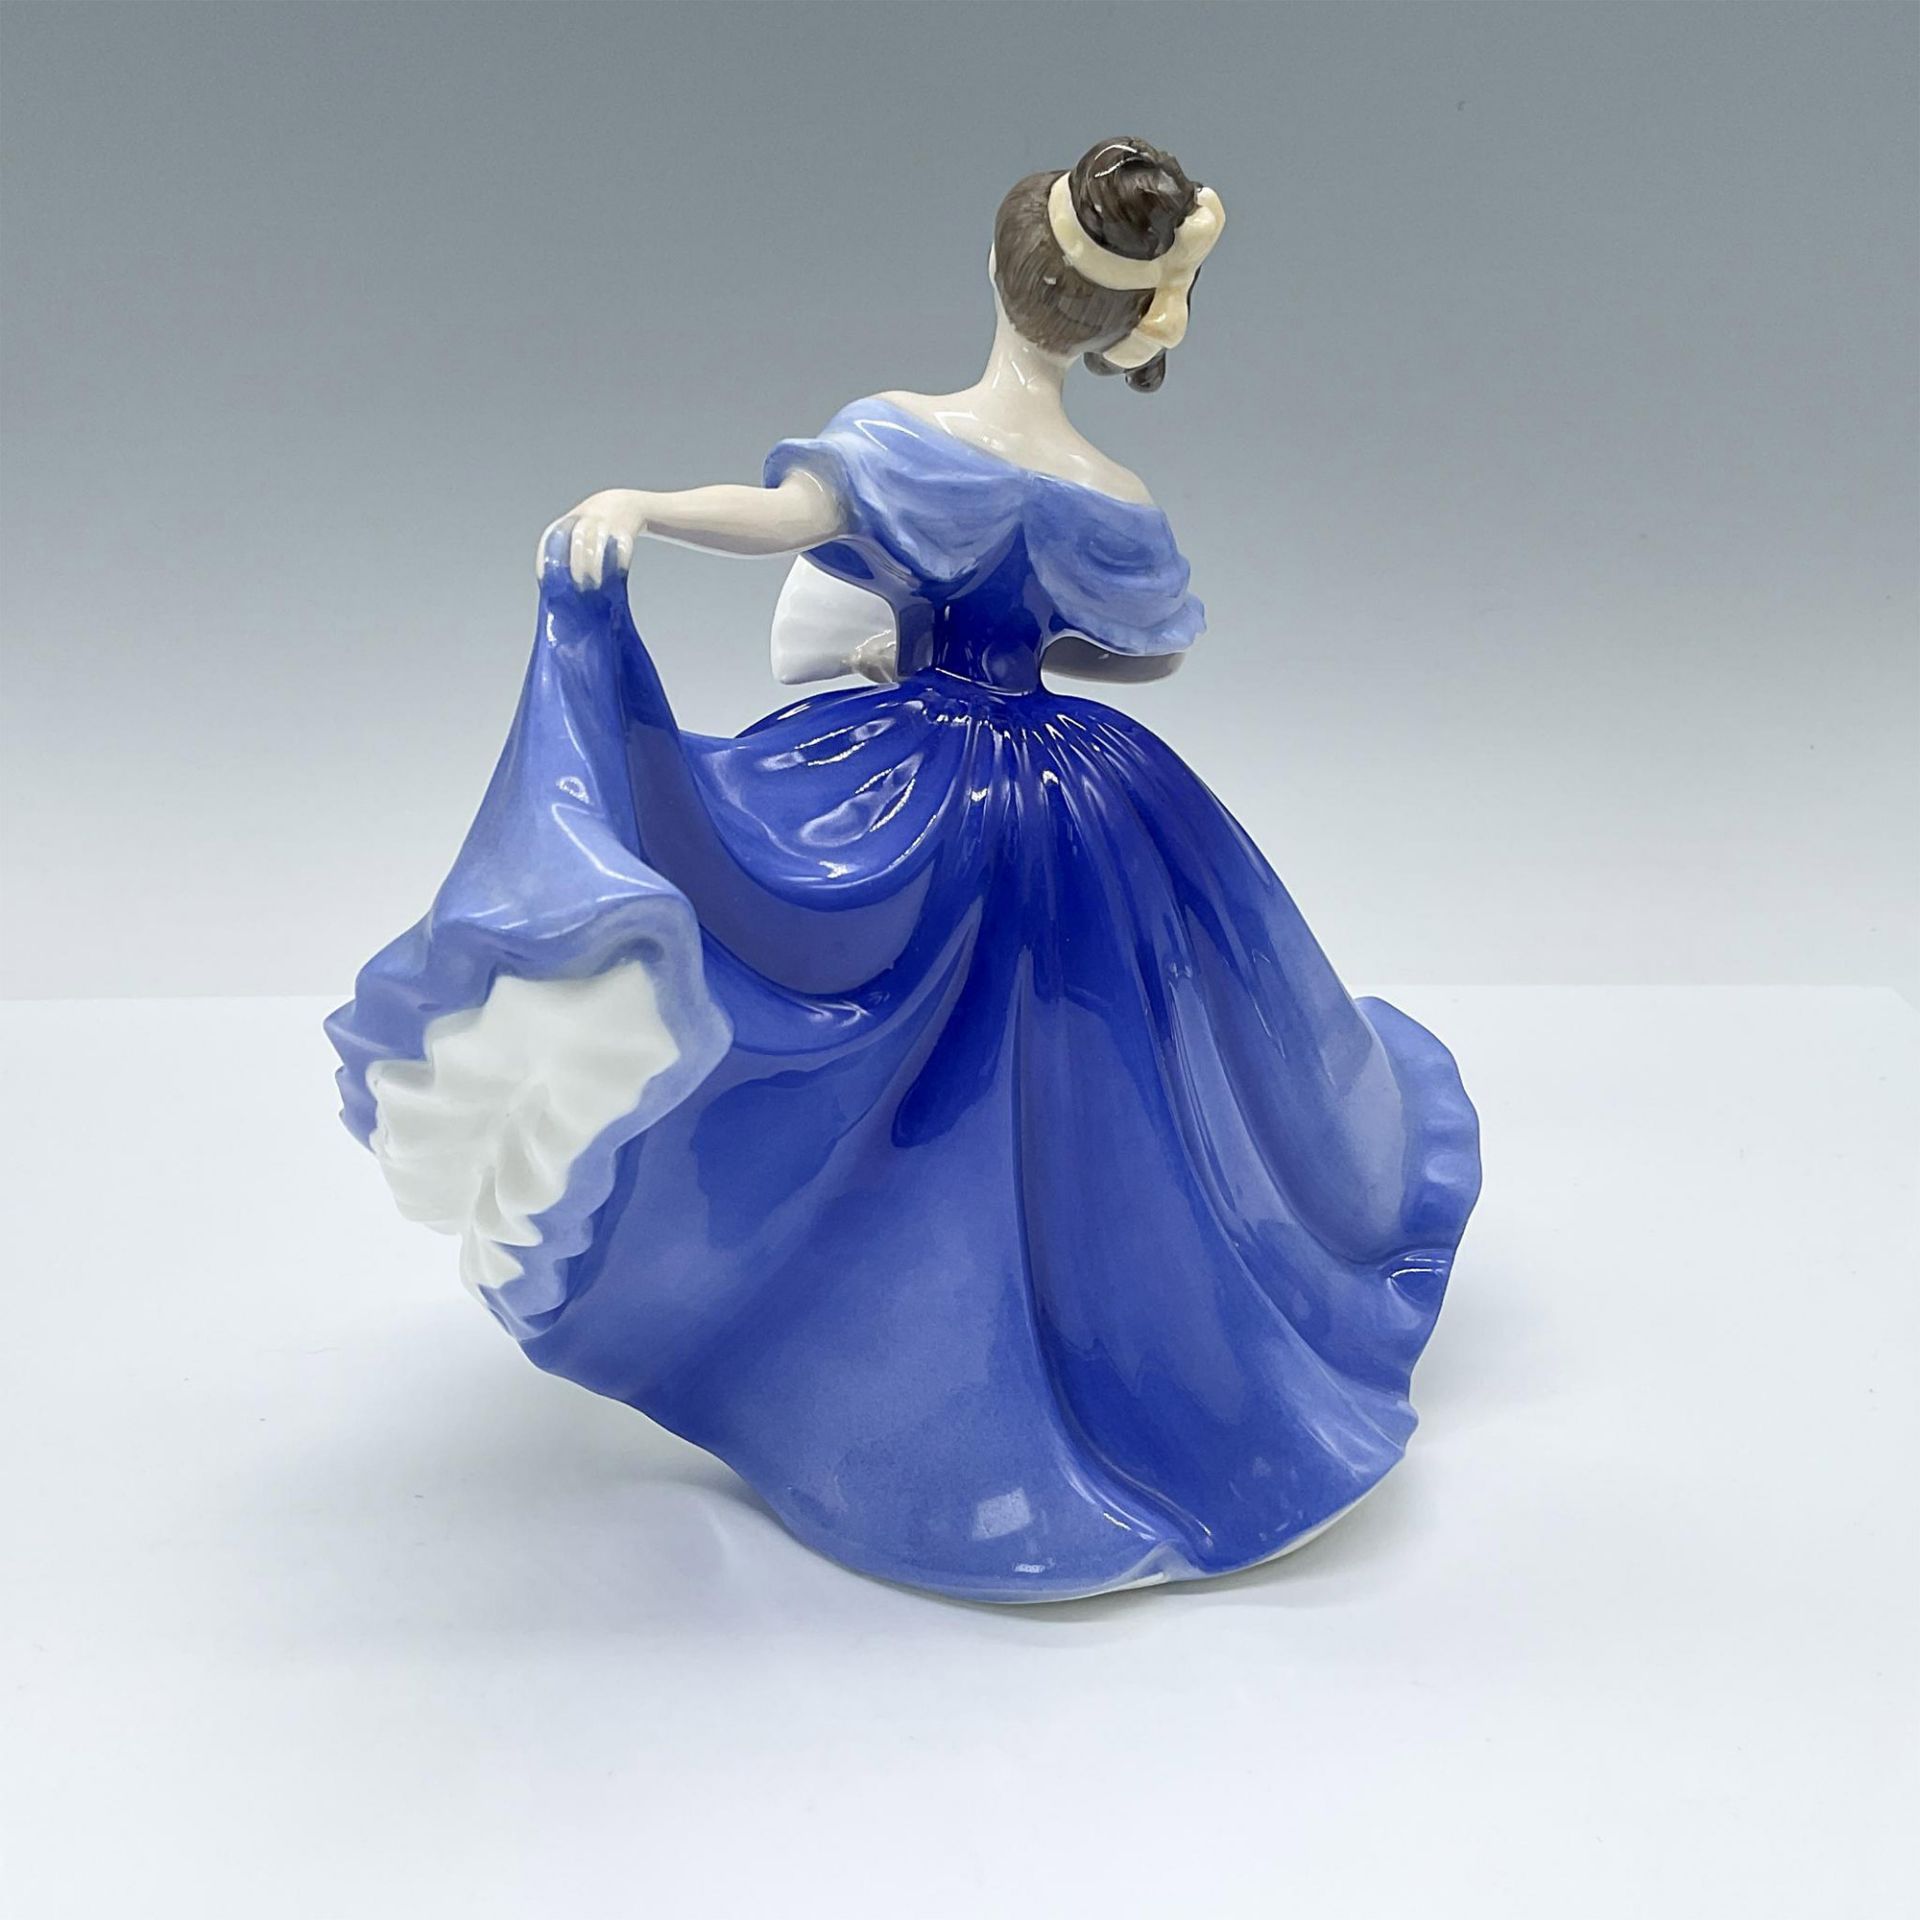 Elaine - HN2791 - Royal Doulton Porcelain Figurine - Image 2 of 3